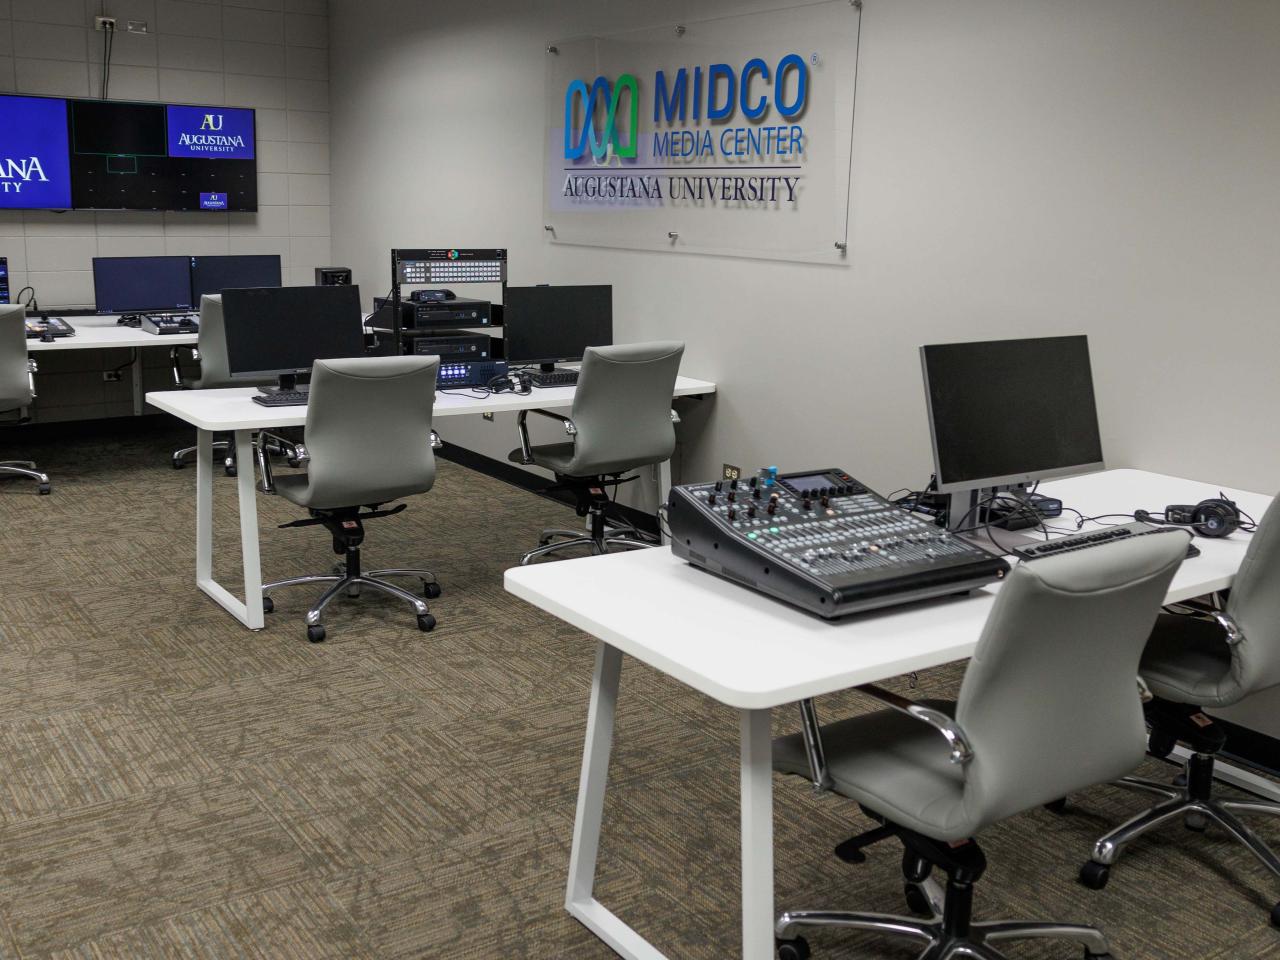 Building the Midco Media Center